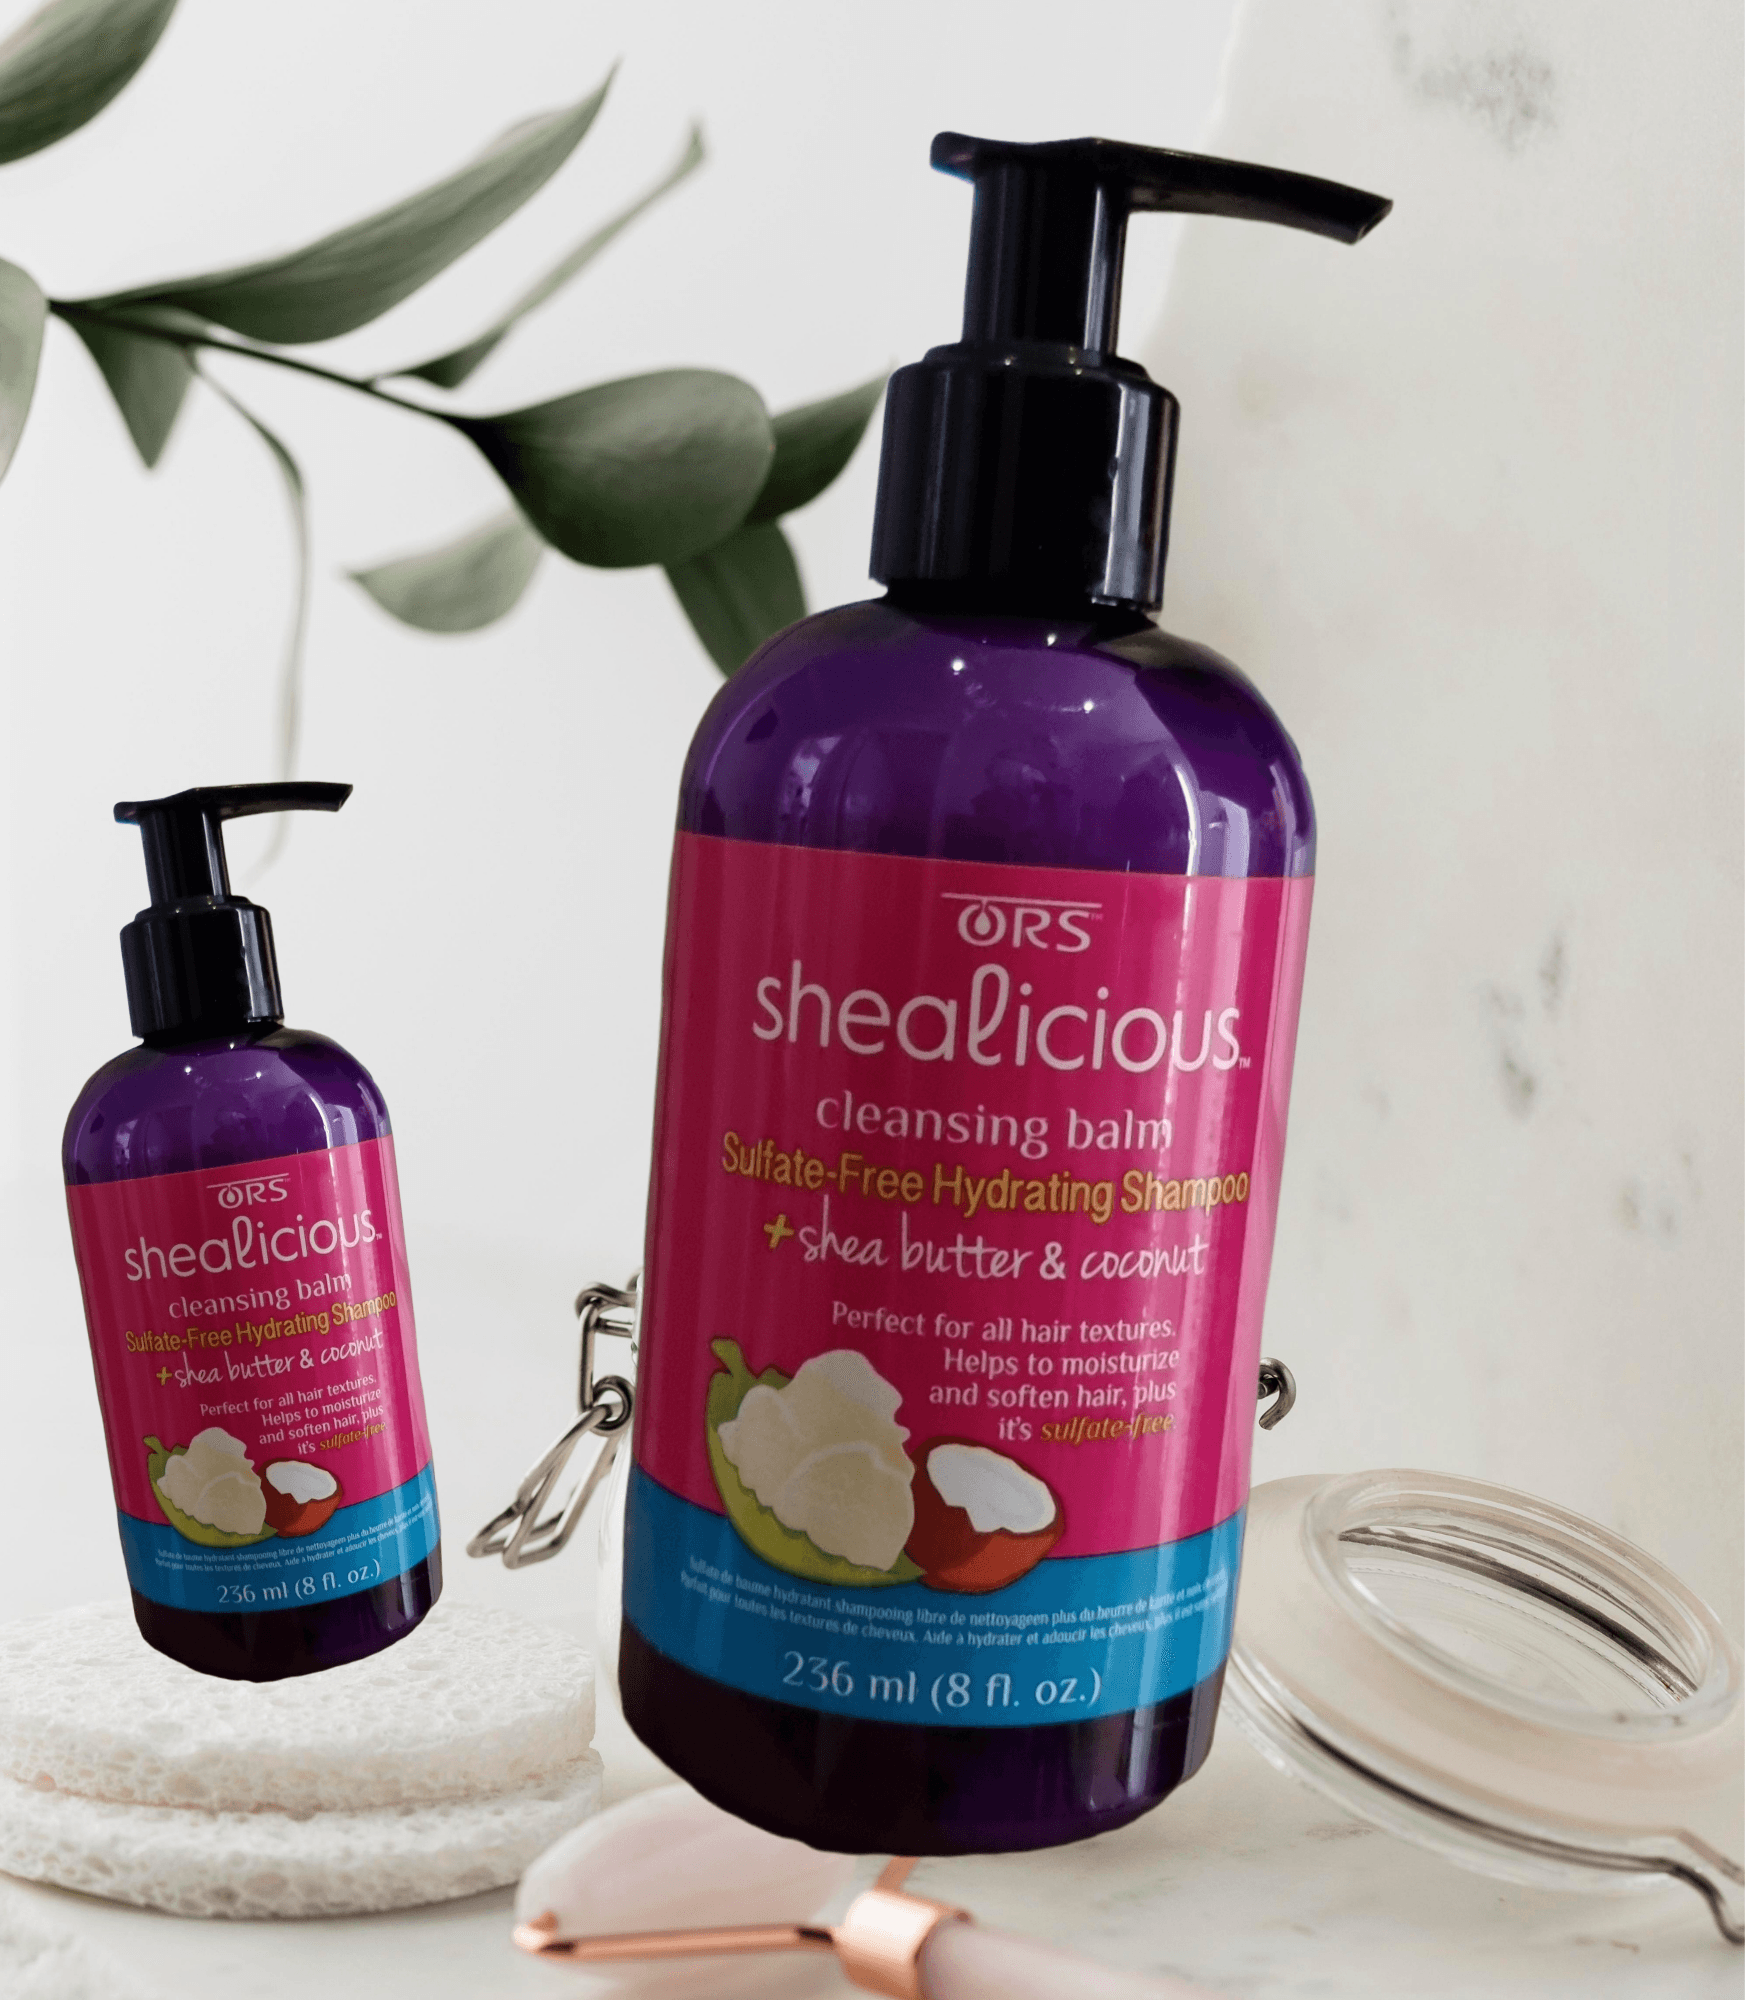 ORS Shealicious Cleansing/Hydrating Shampoo - LocsNco